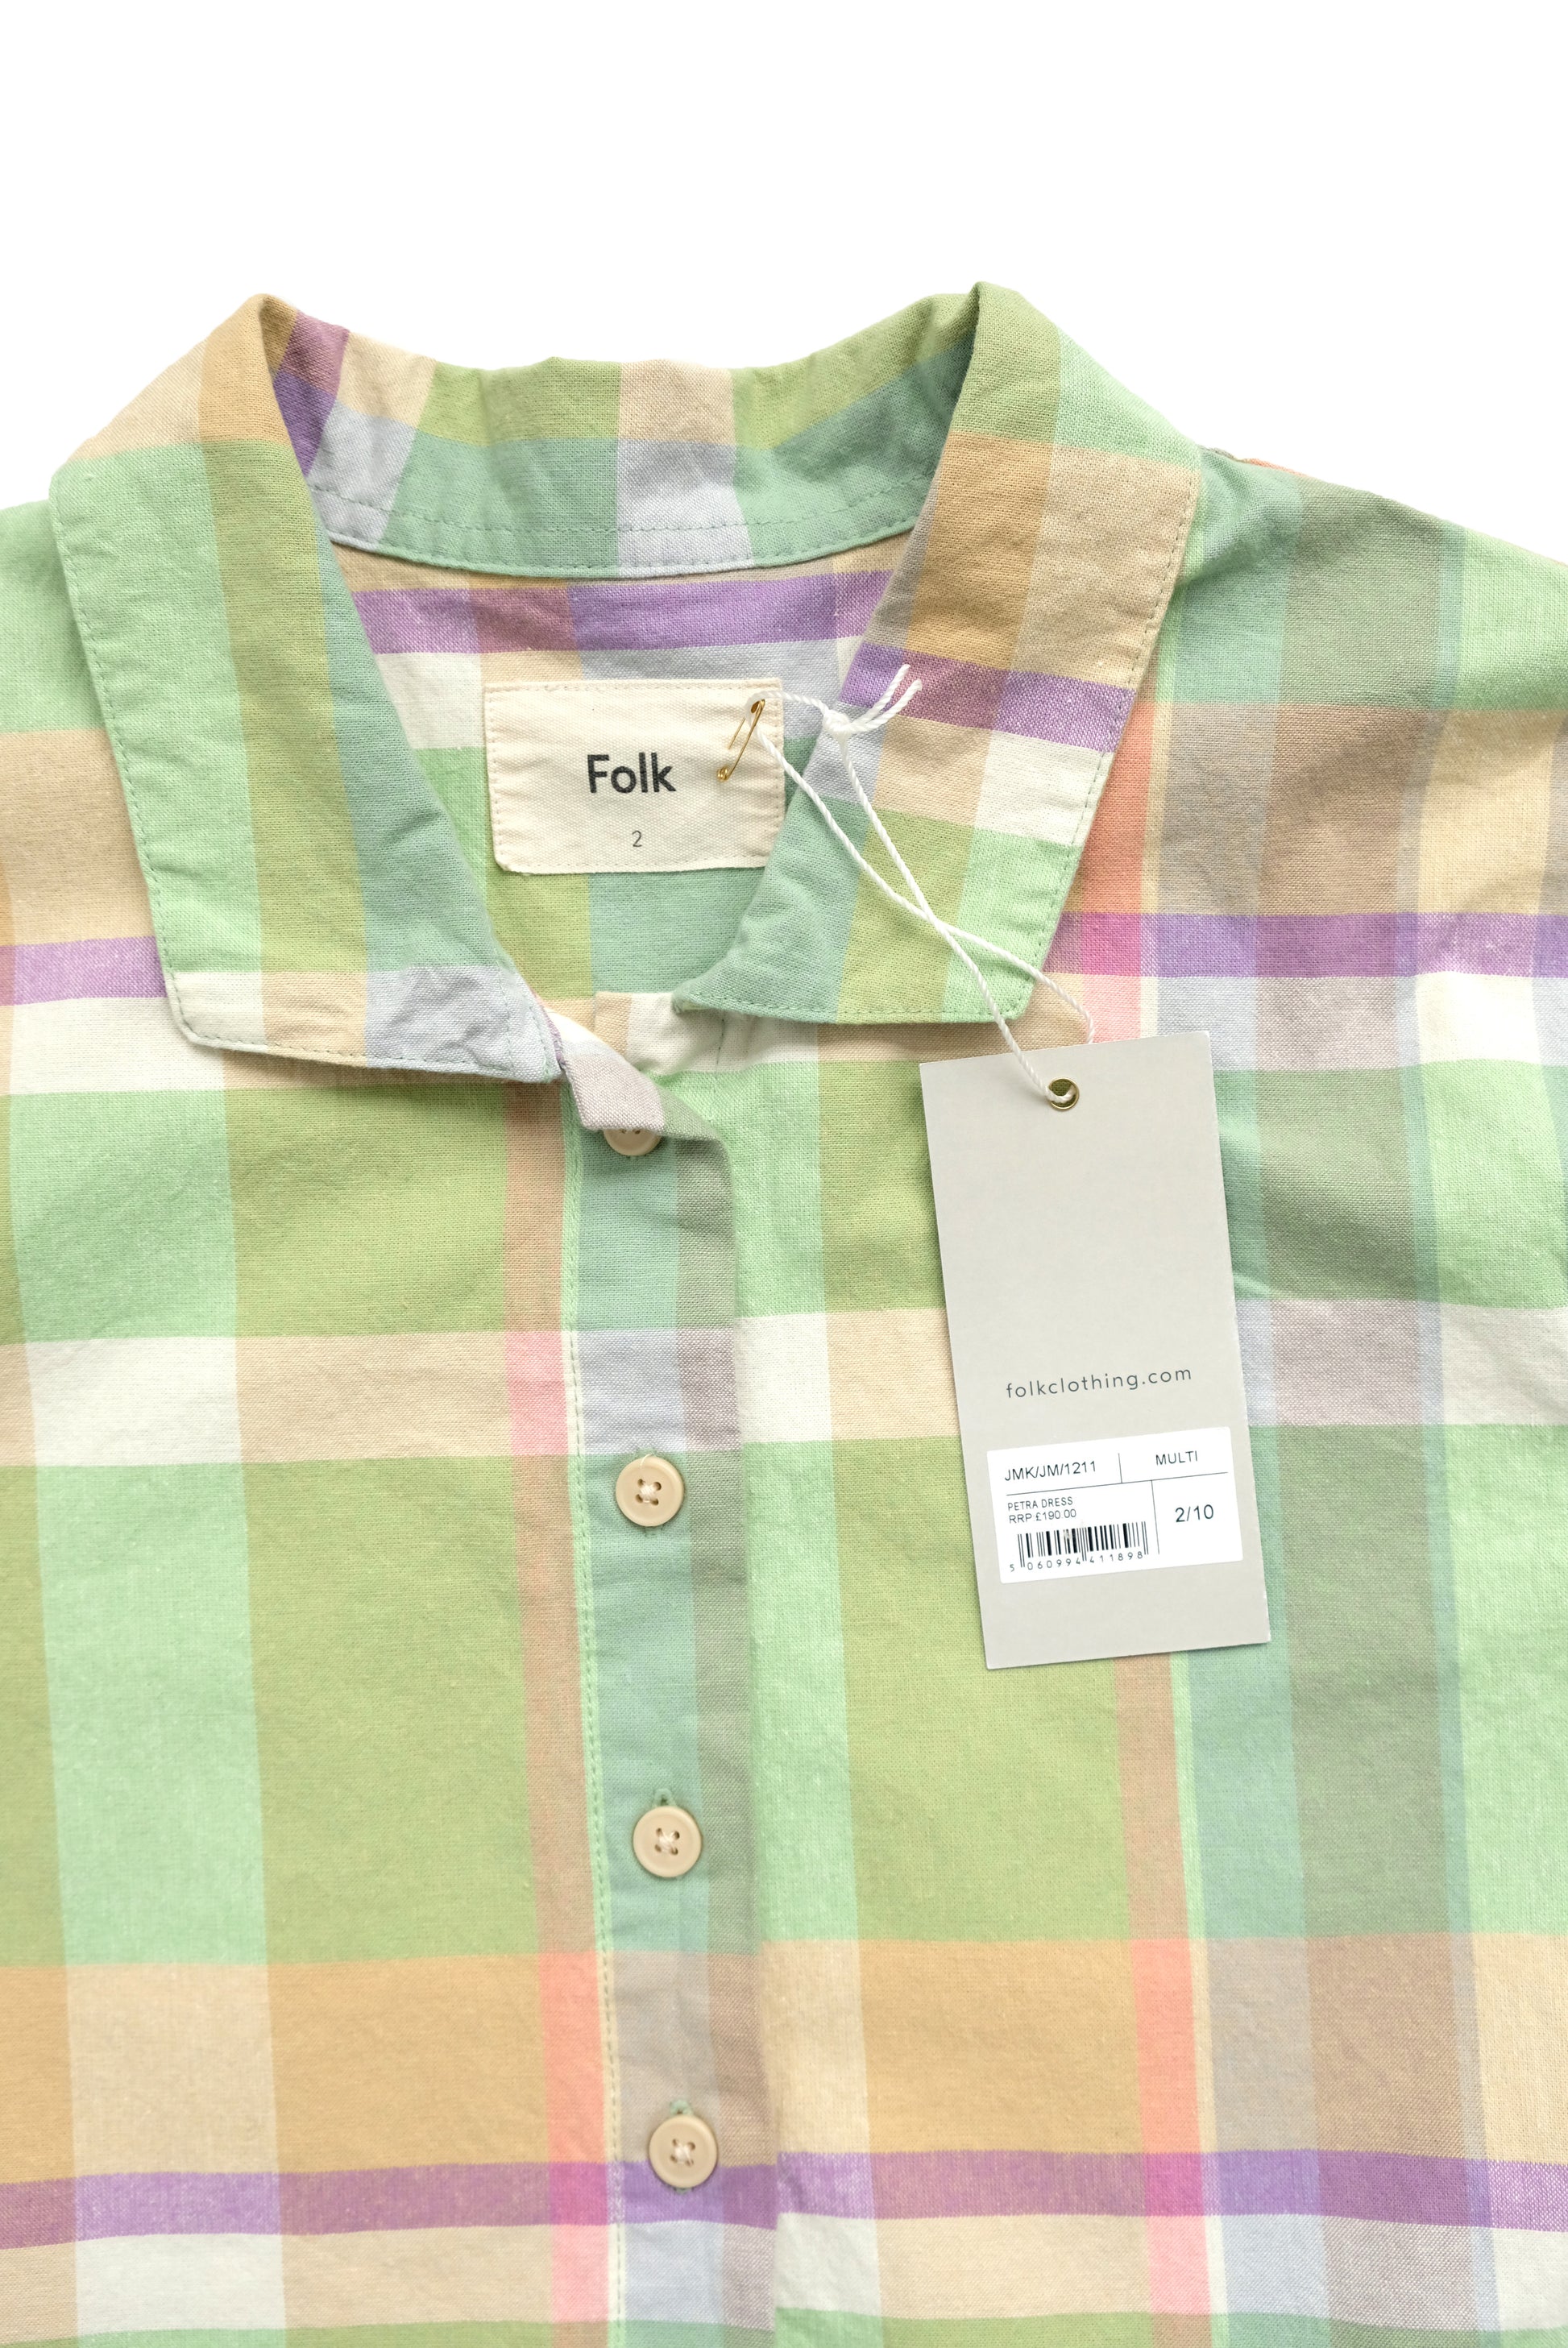 Folk Summer Shirtdress in Pale Green Check Cotton